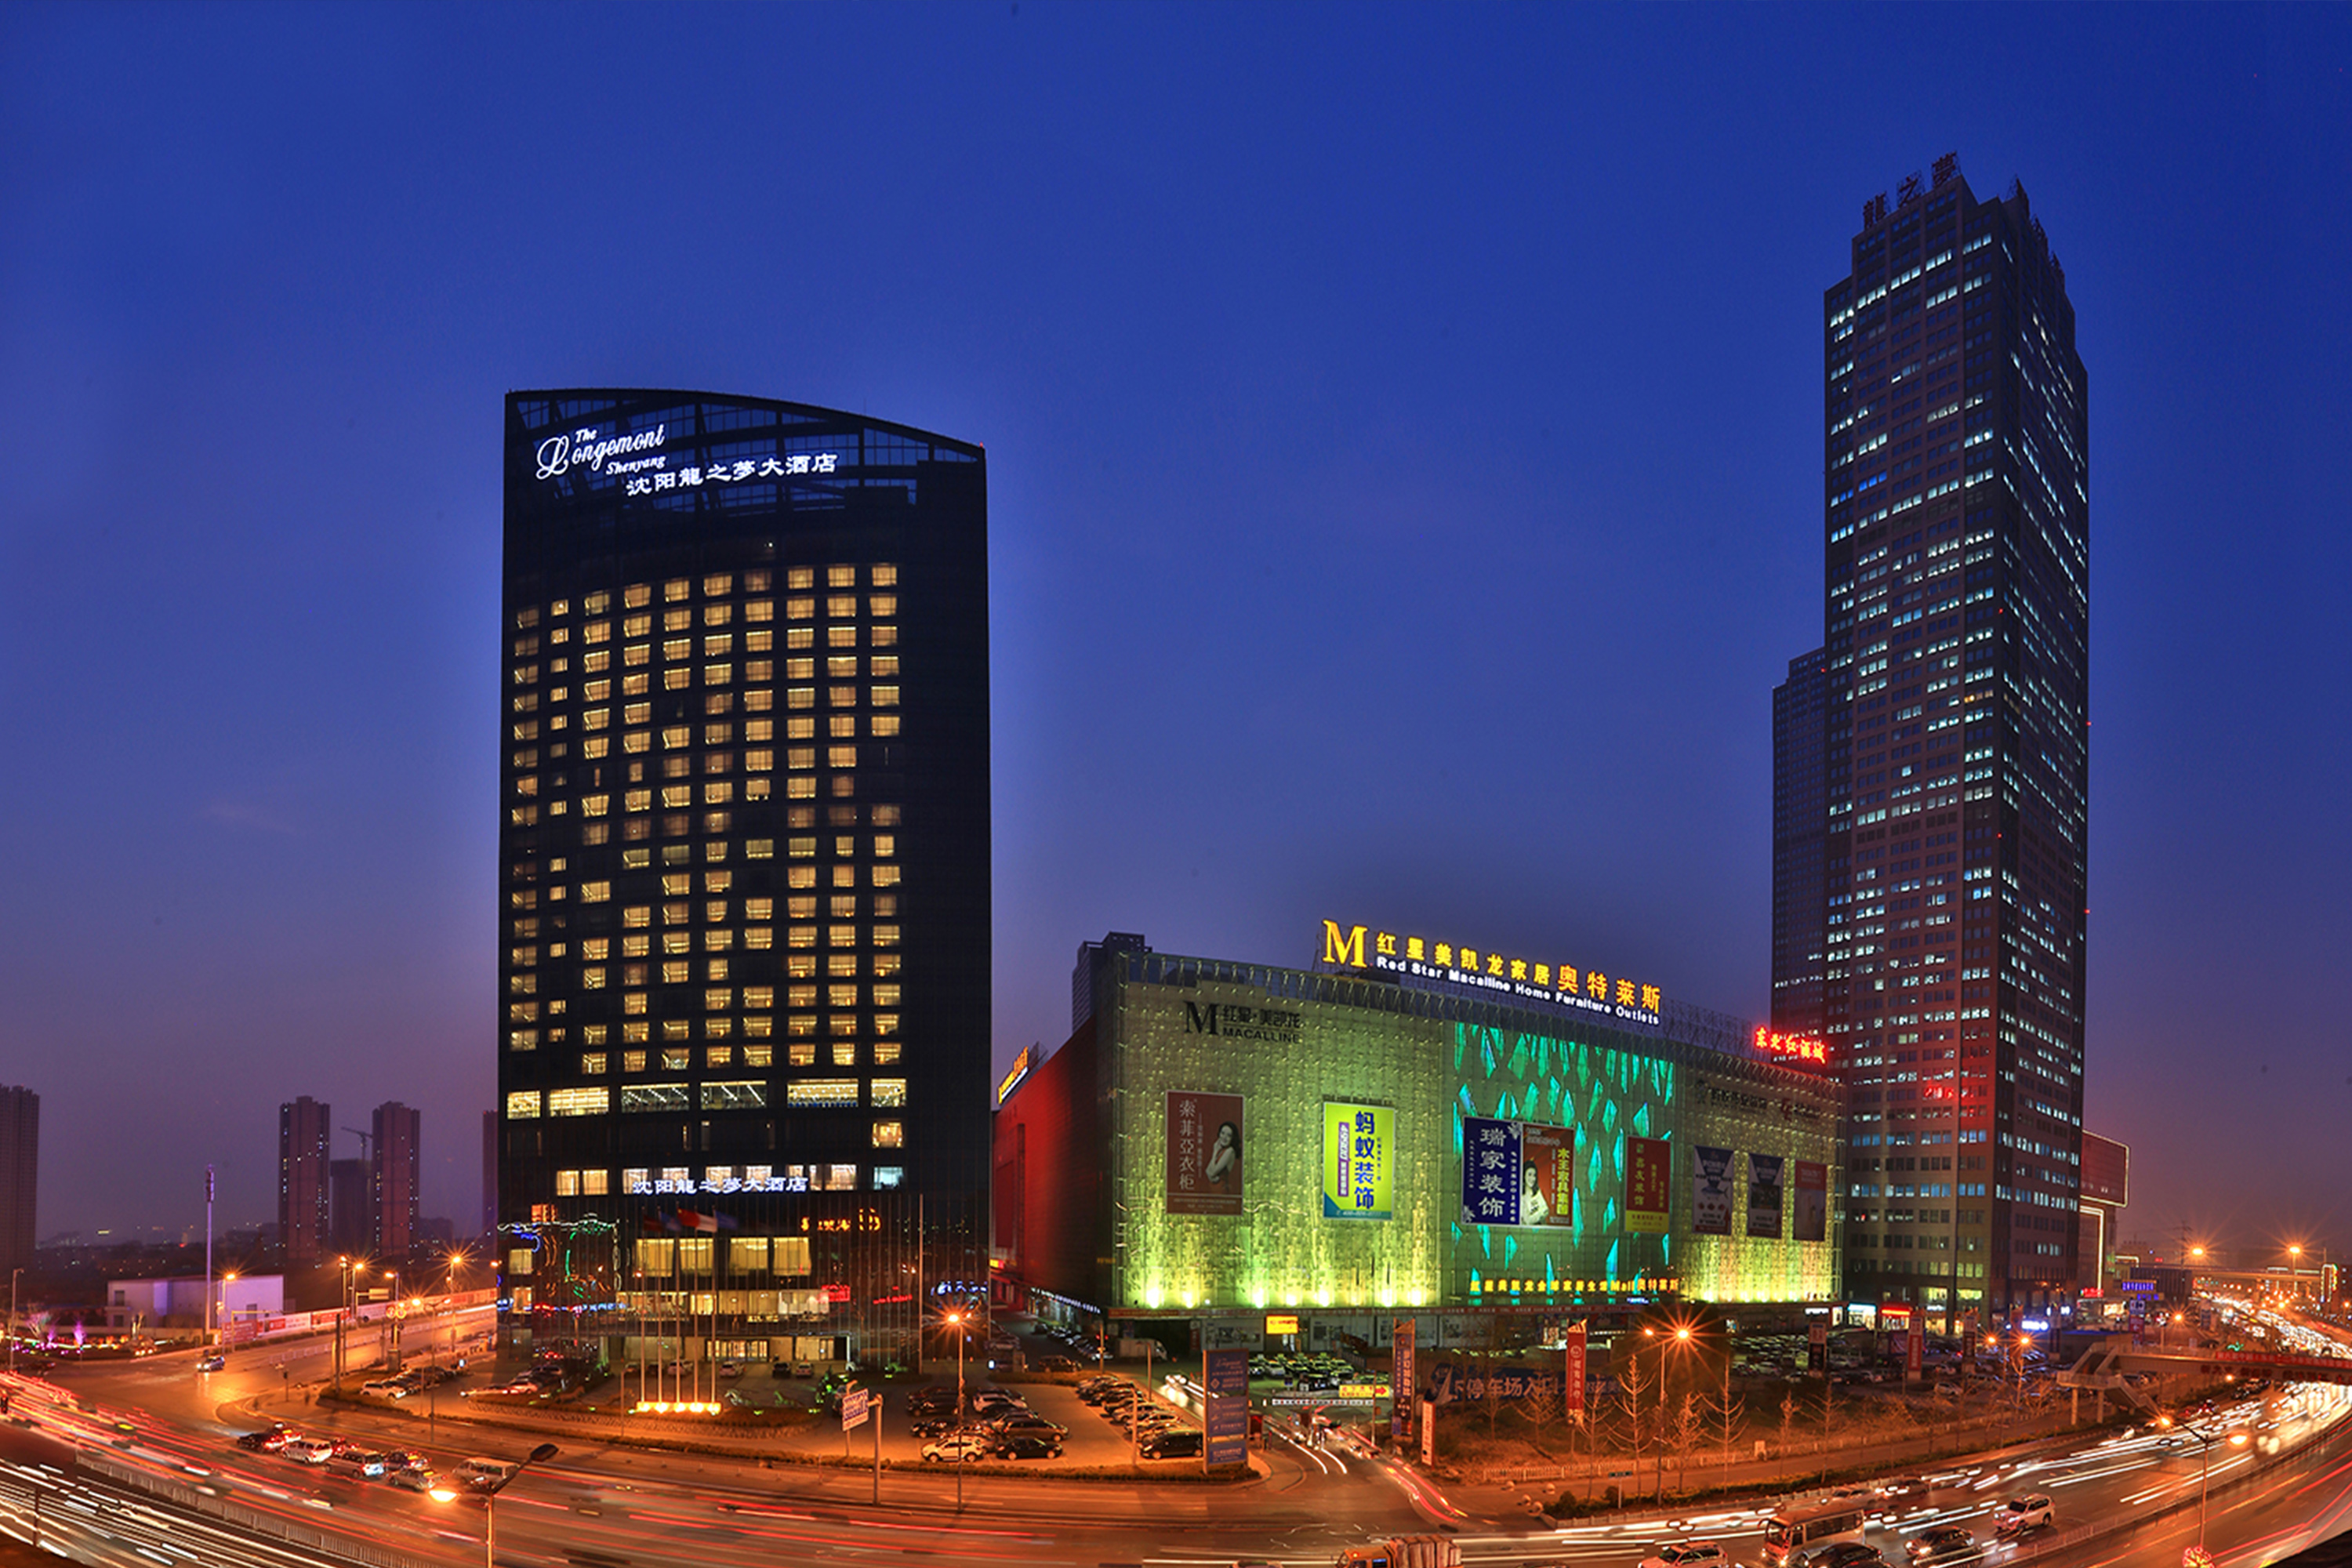 The Longemont Hotel Shenyang